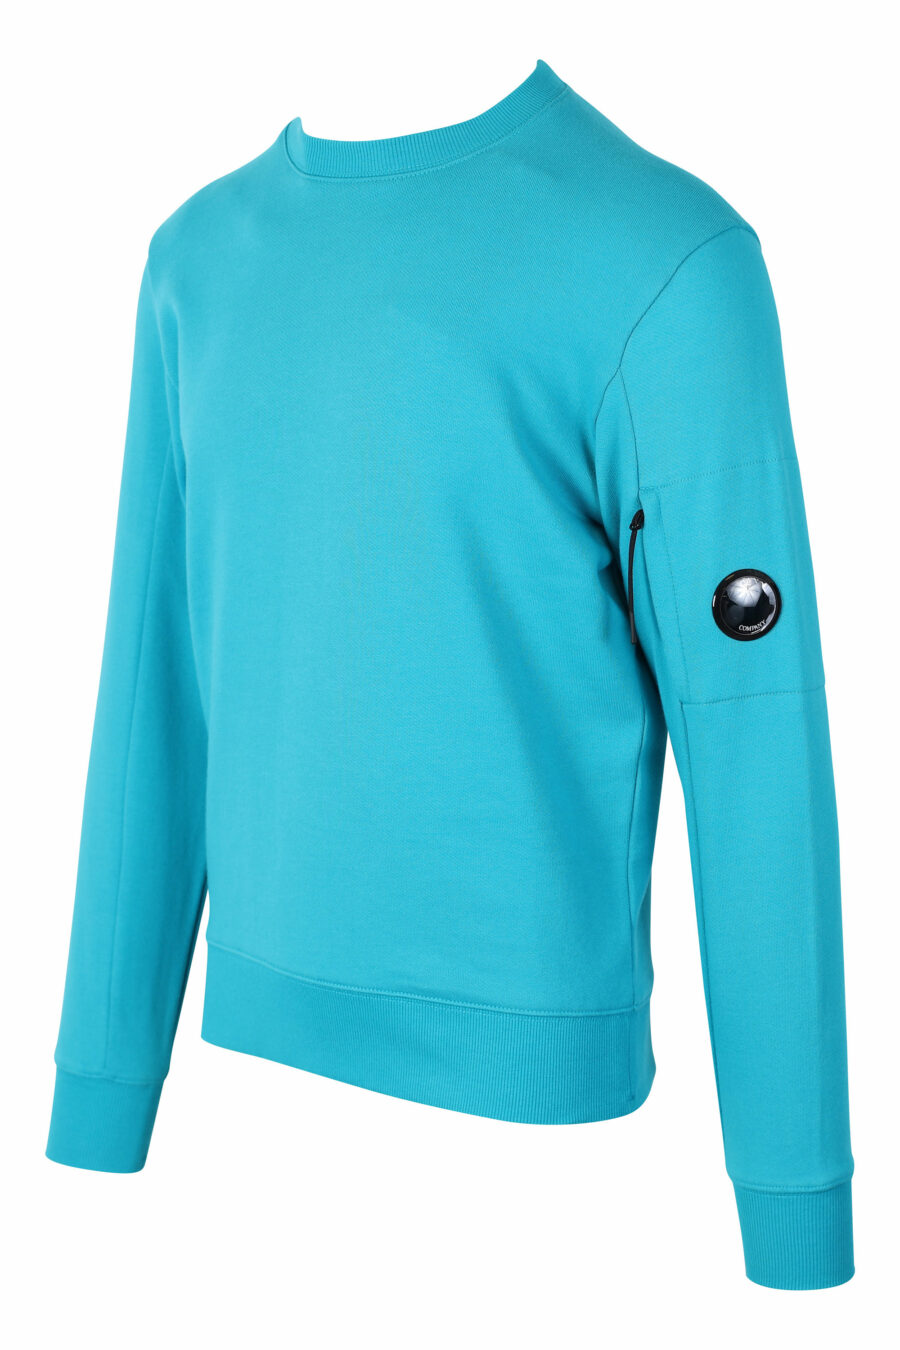 Turquoise sweatshirt with circular mini-logo on the side - IMG 2395